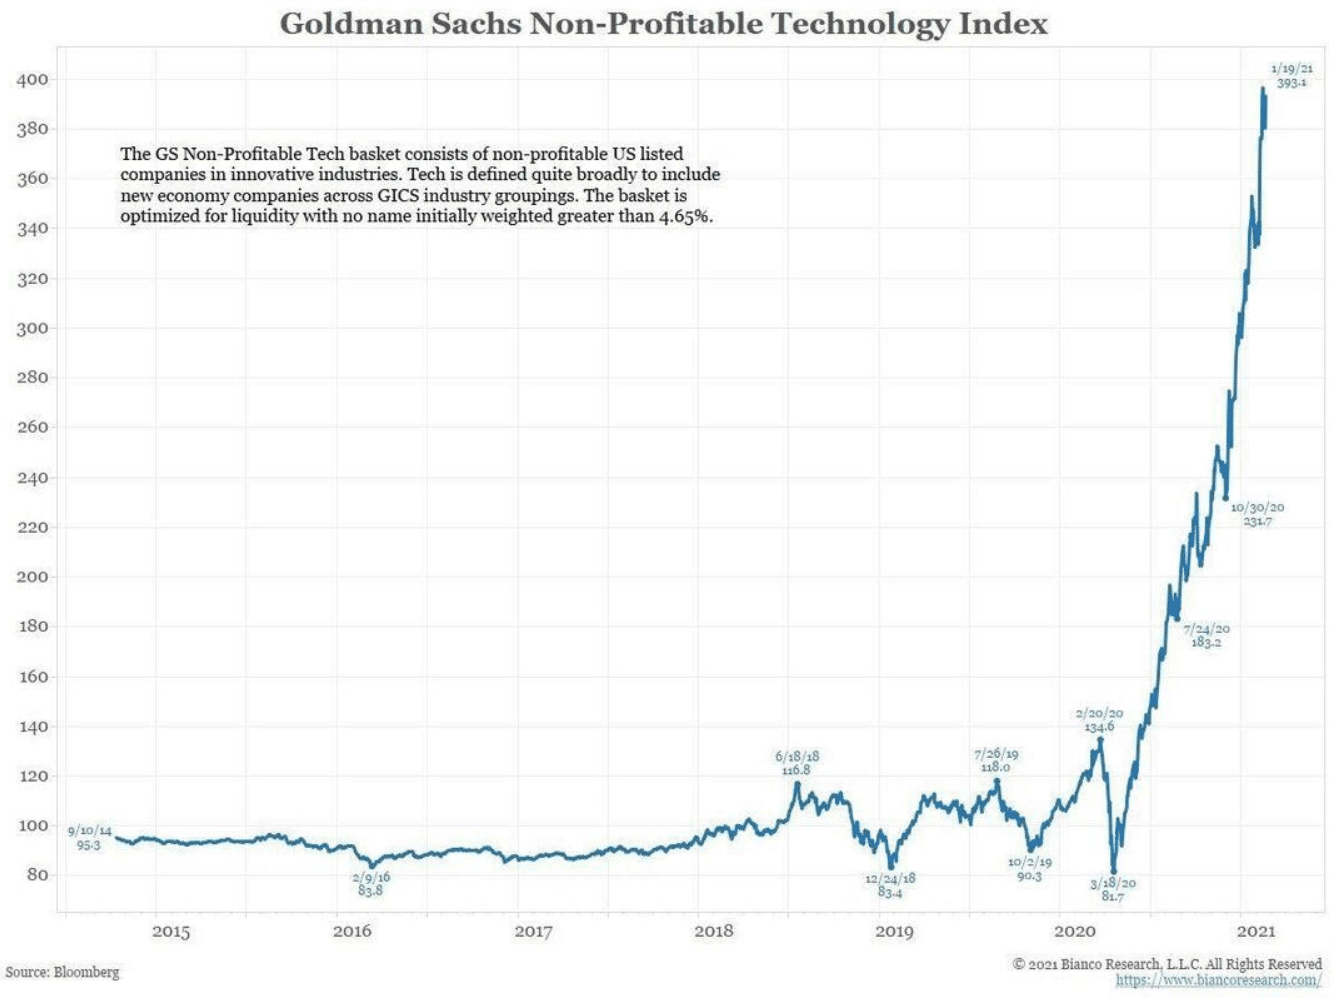 Non Profitable Tech Index - Goldman Sachs